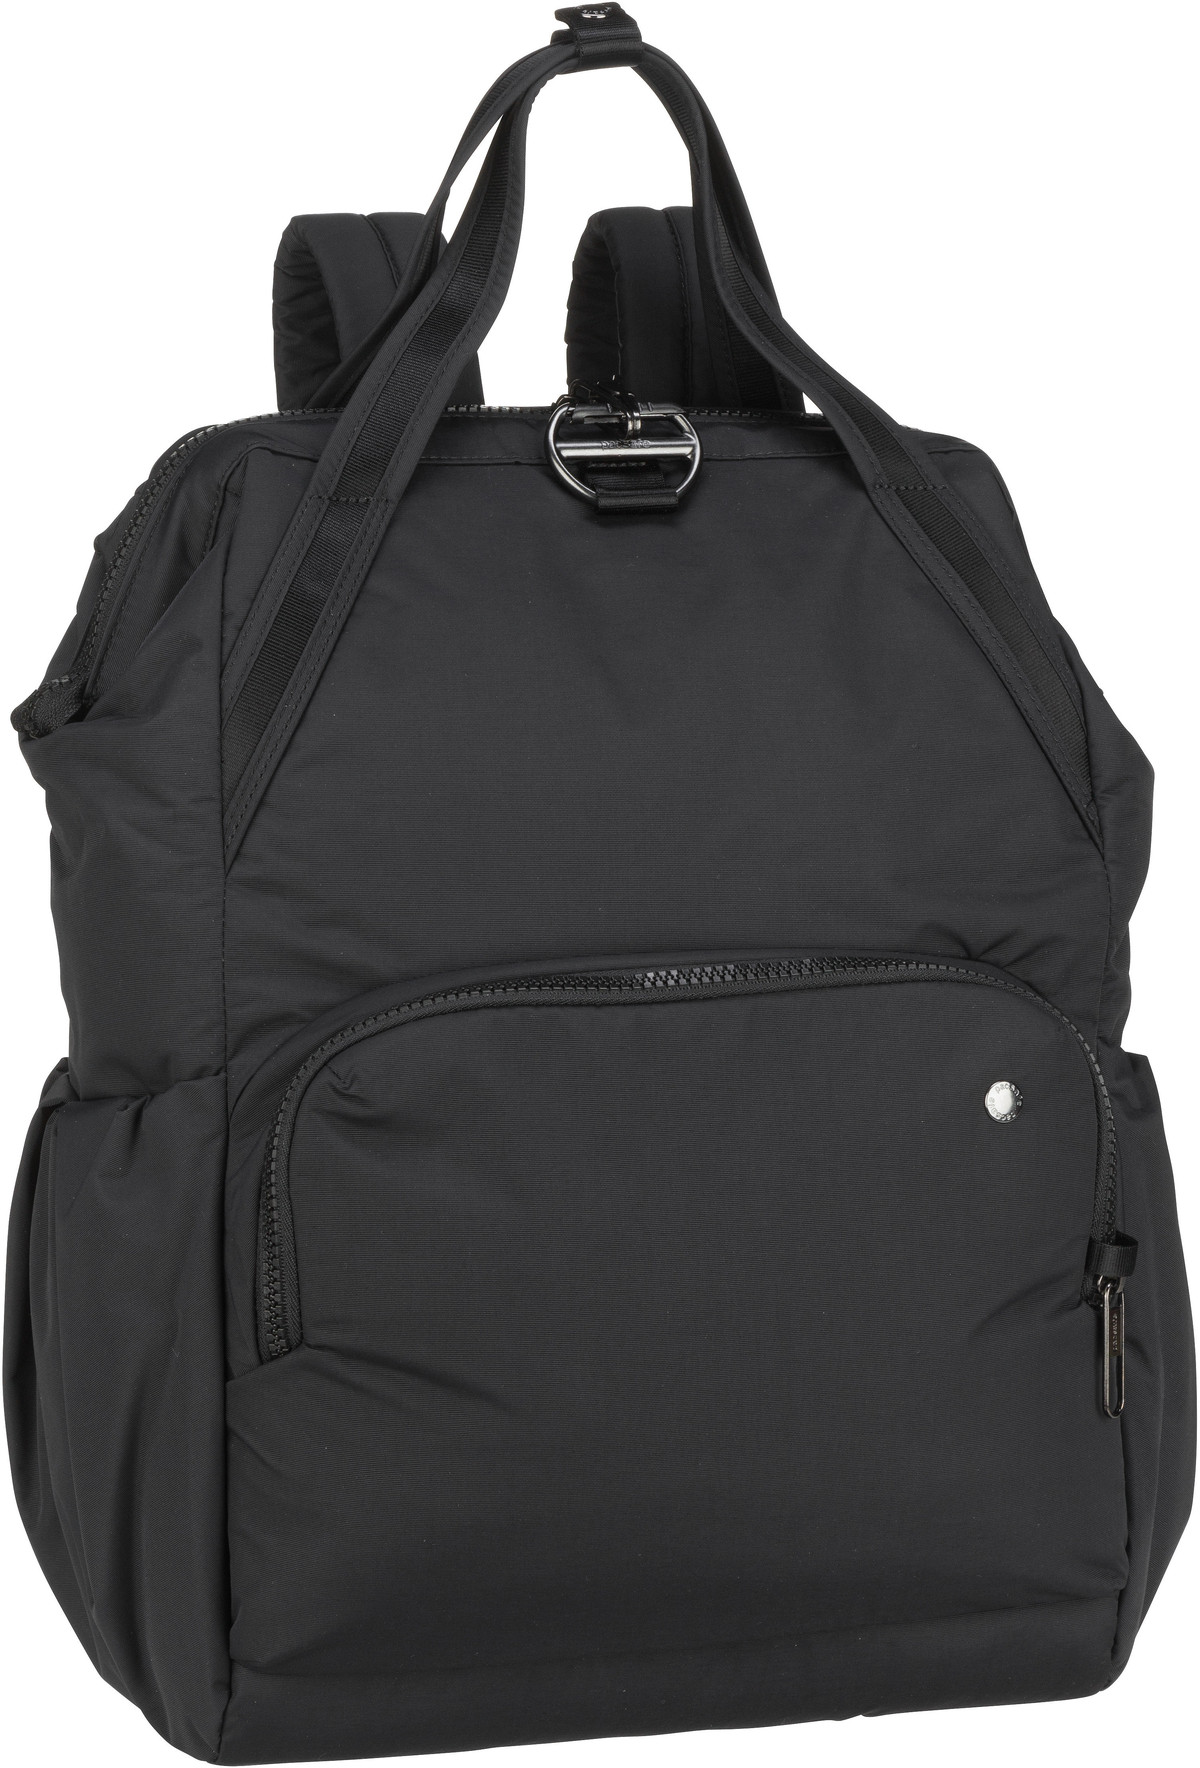 Pacsafe Citysafe CX Backpack - Econyl Black